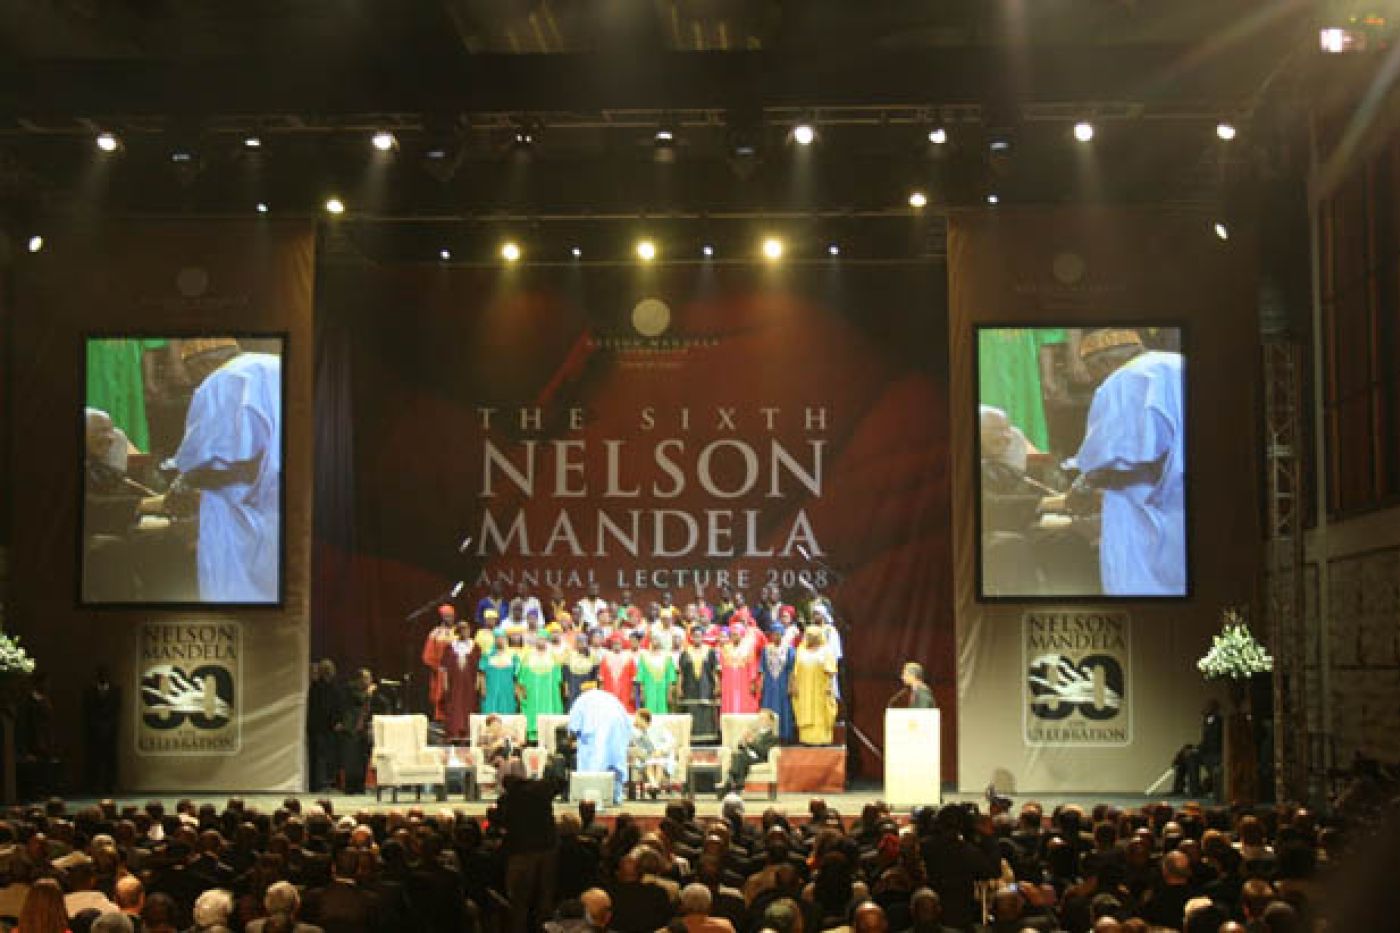 Sixth Nelson Mandela Annual Lecture - Soweto Gospel Choir